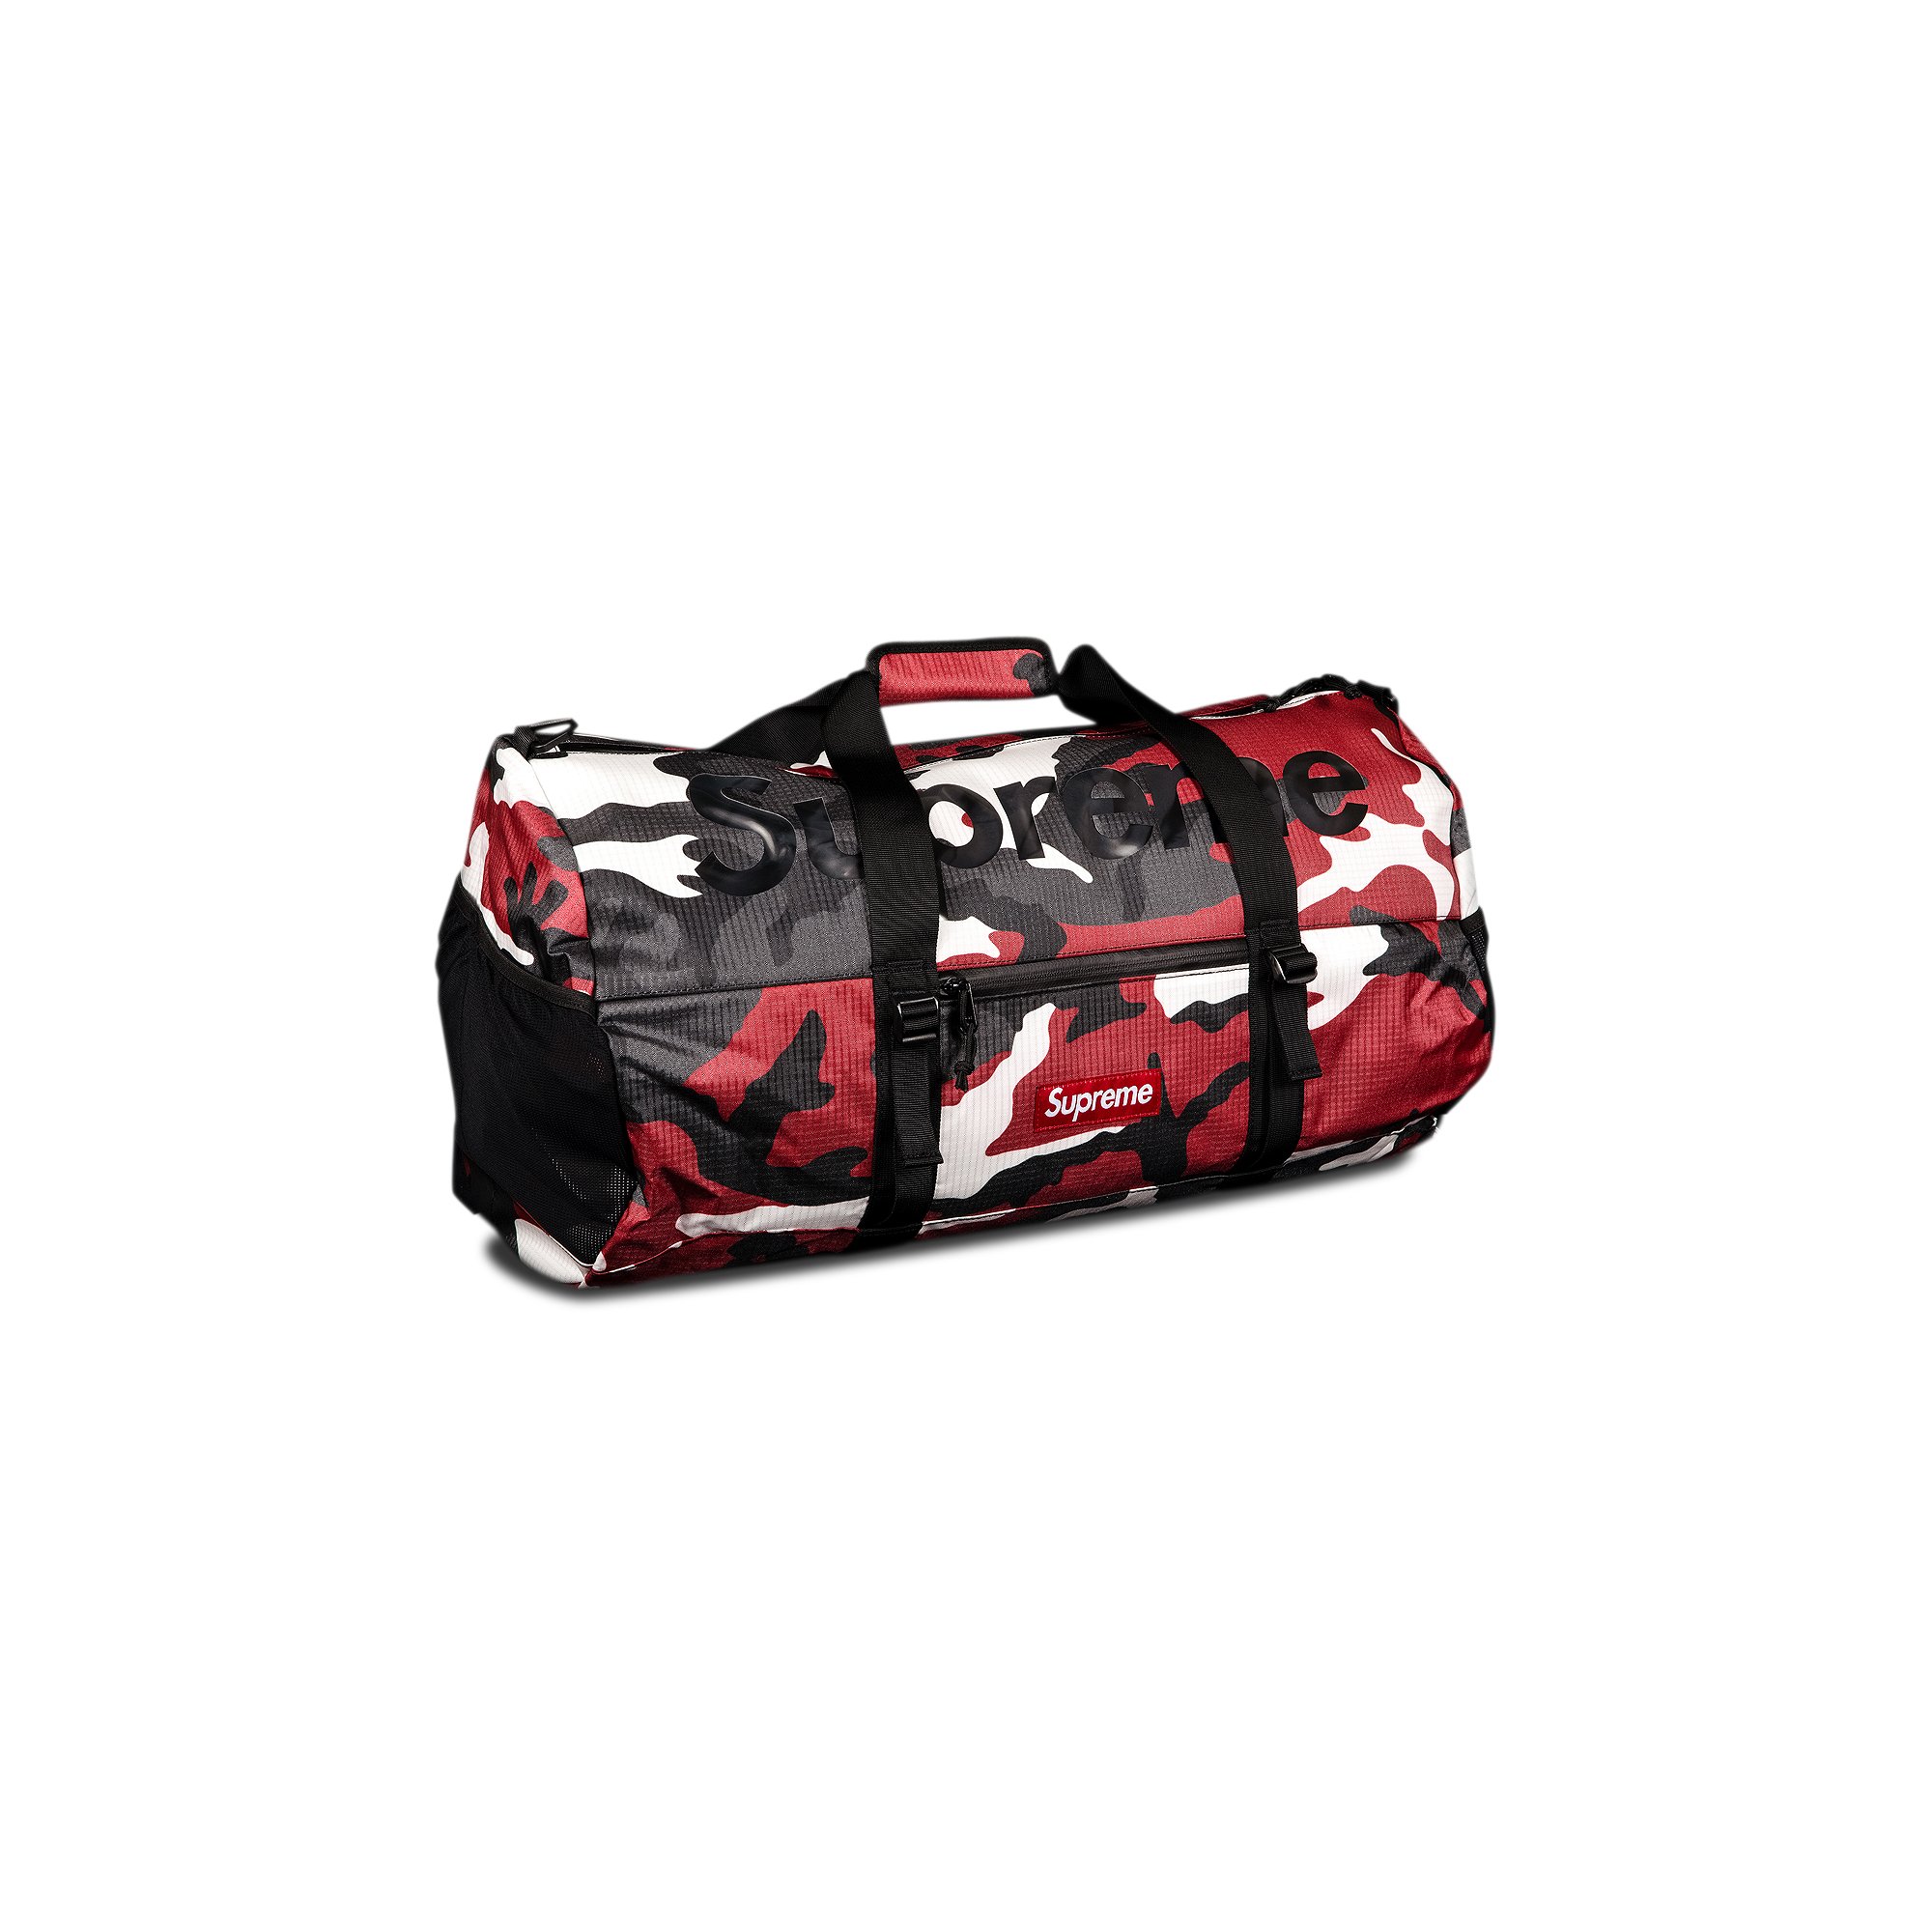 Buy Supreme Duffle Bag 'Red Camo' - SS21B10 RED CAMO | GOAT